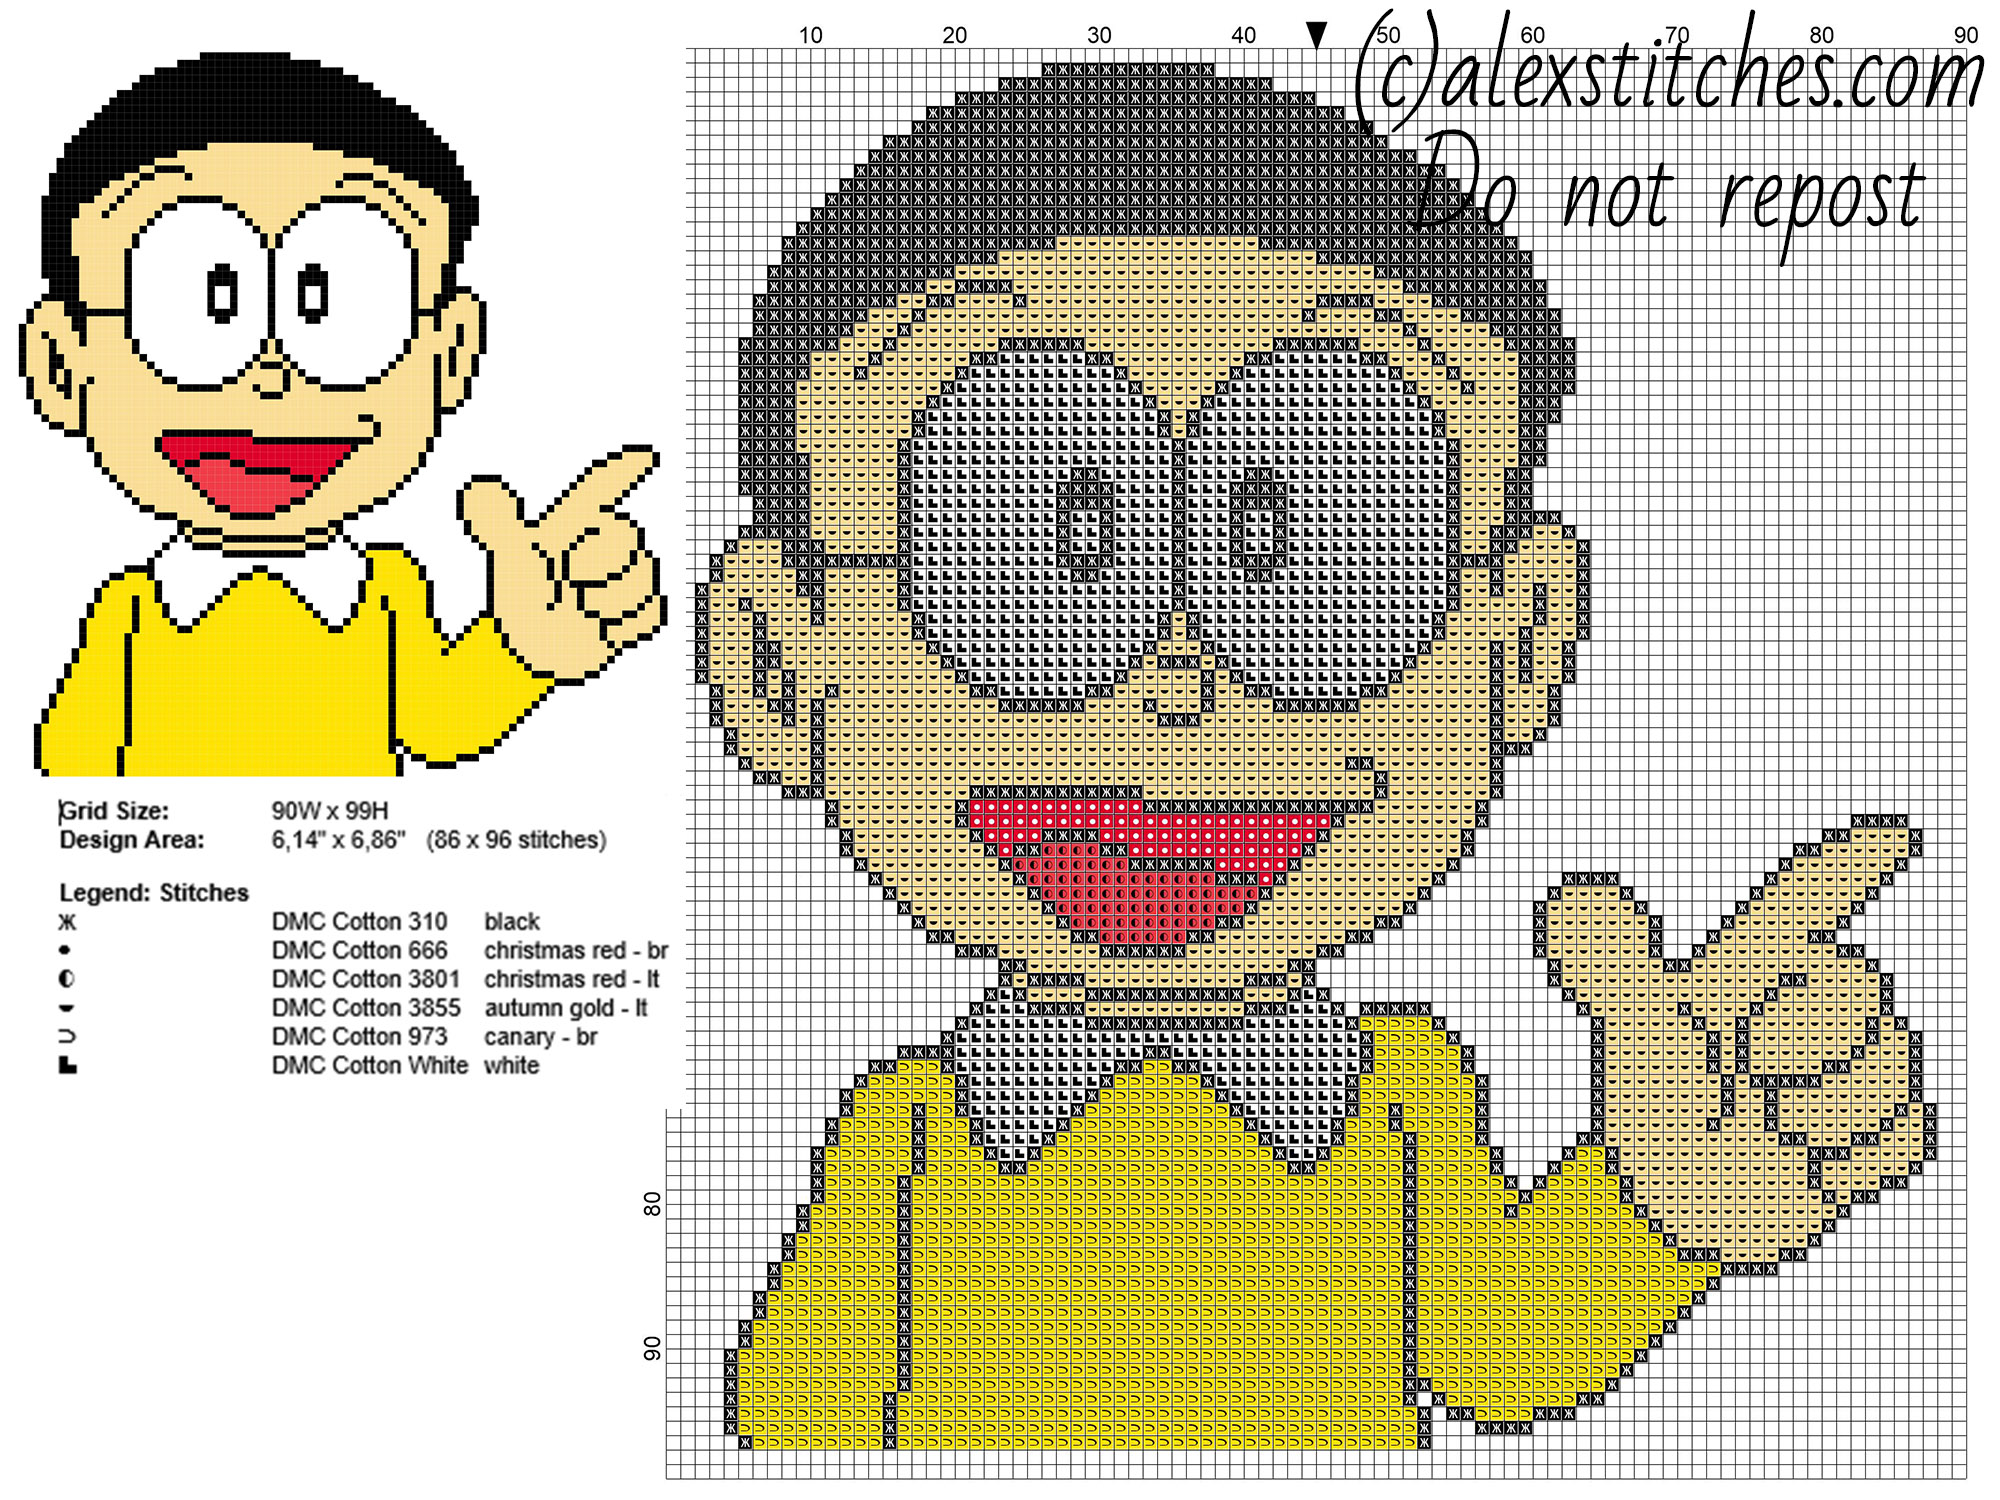 Nobita Doraemon cartoon character free cross stitch pattern 86 x 96 stitches  6 DMC threads - free cross stitch patterns by Alex